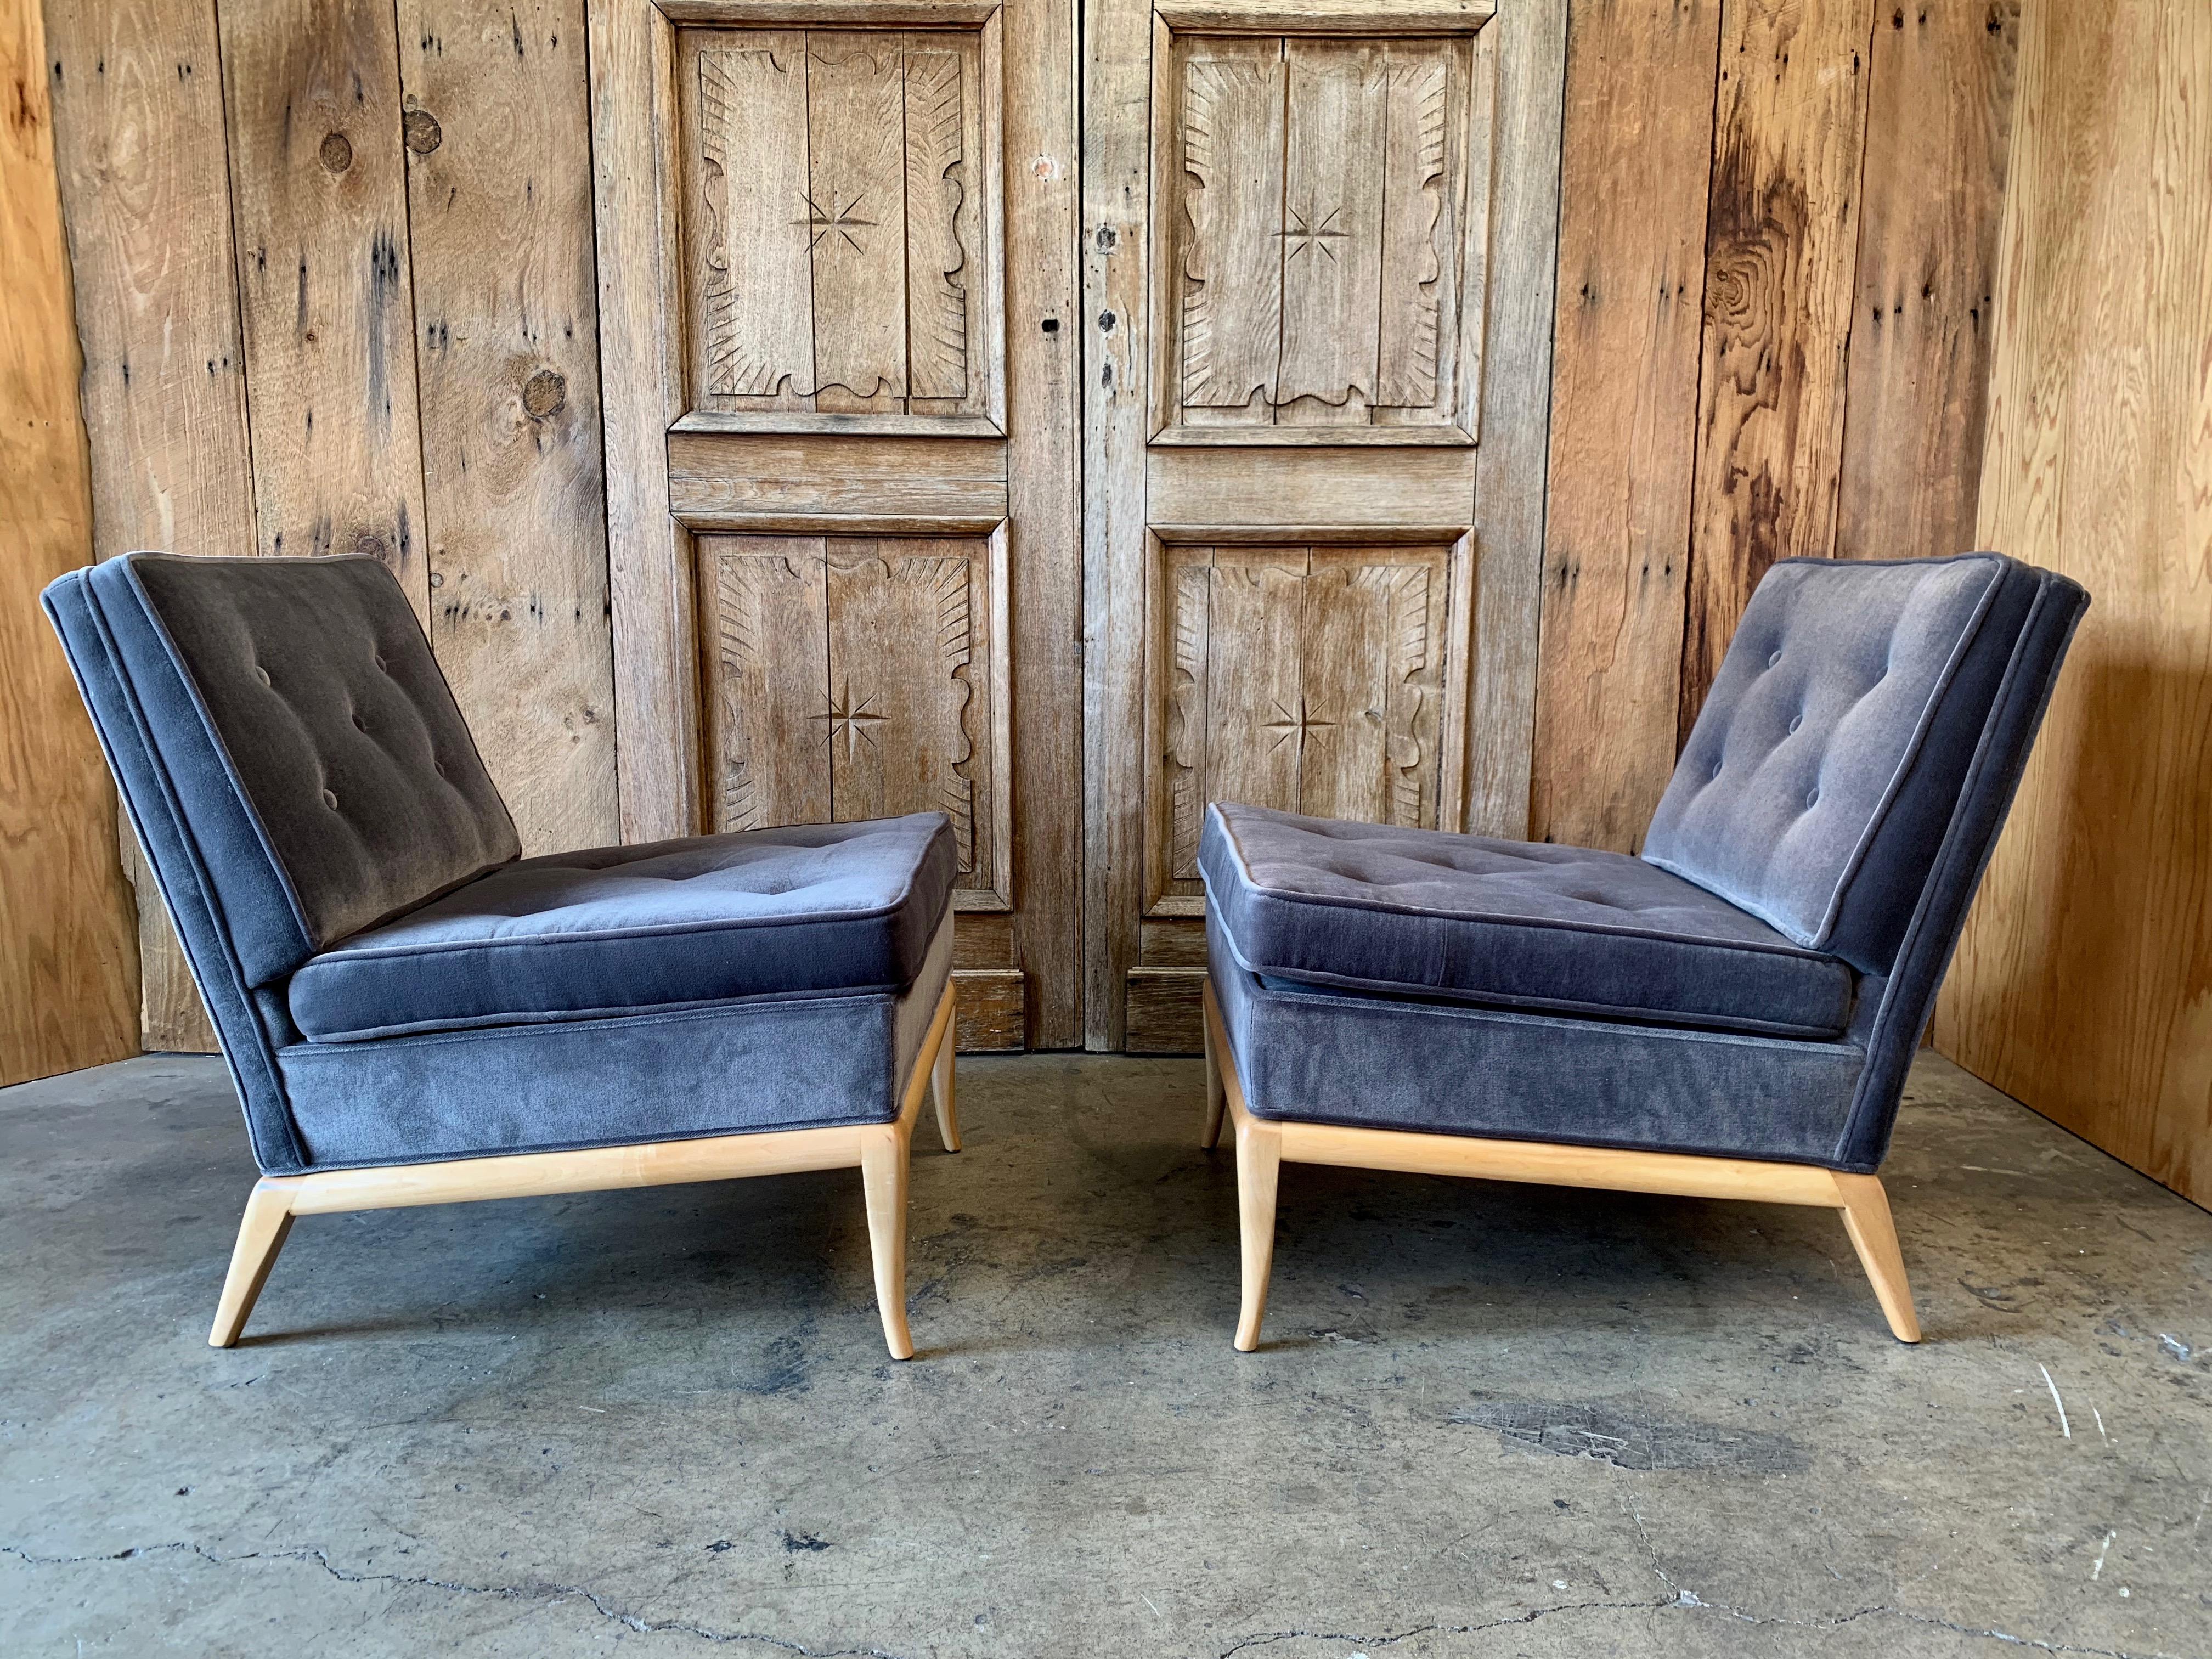 Pair of slipper lounge chairs by T.H. Robsjohn Gibbings. This pair has been upholstered in a blue gray velvet.